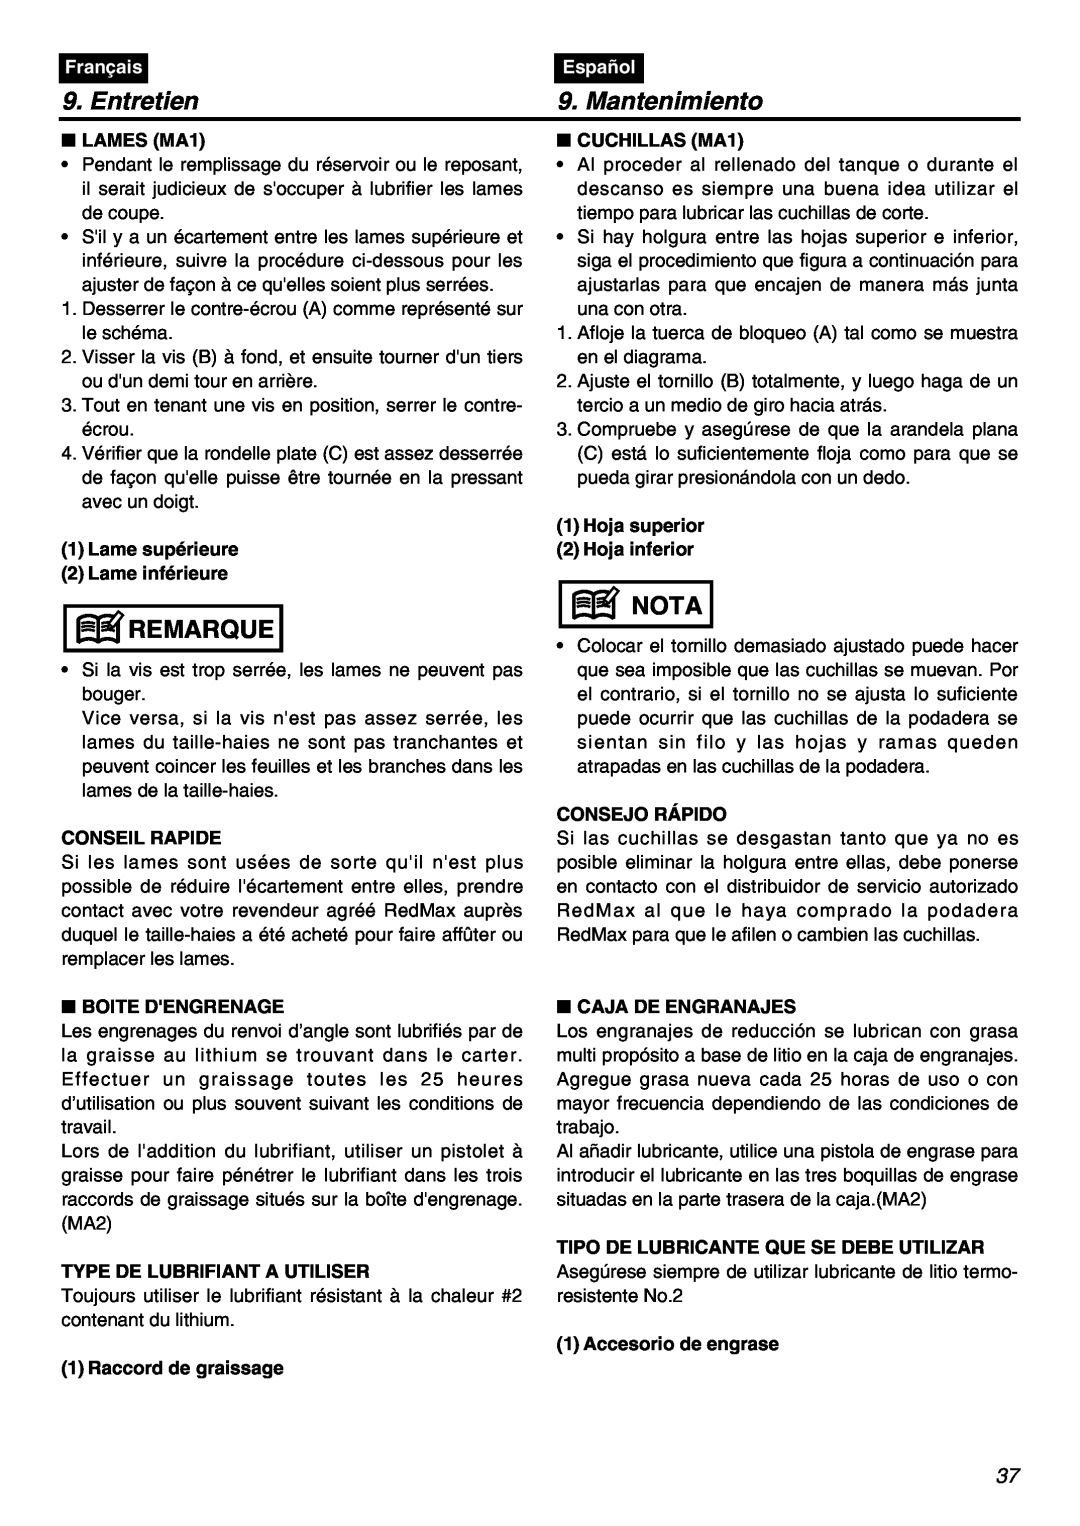 Univex SRTZ2401-CA manual Entretien, Mantenimiento, Remarque, Nota, Français, Español 